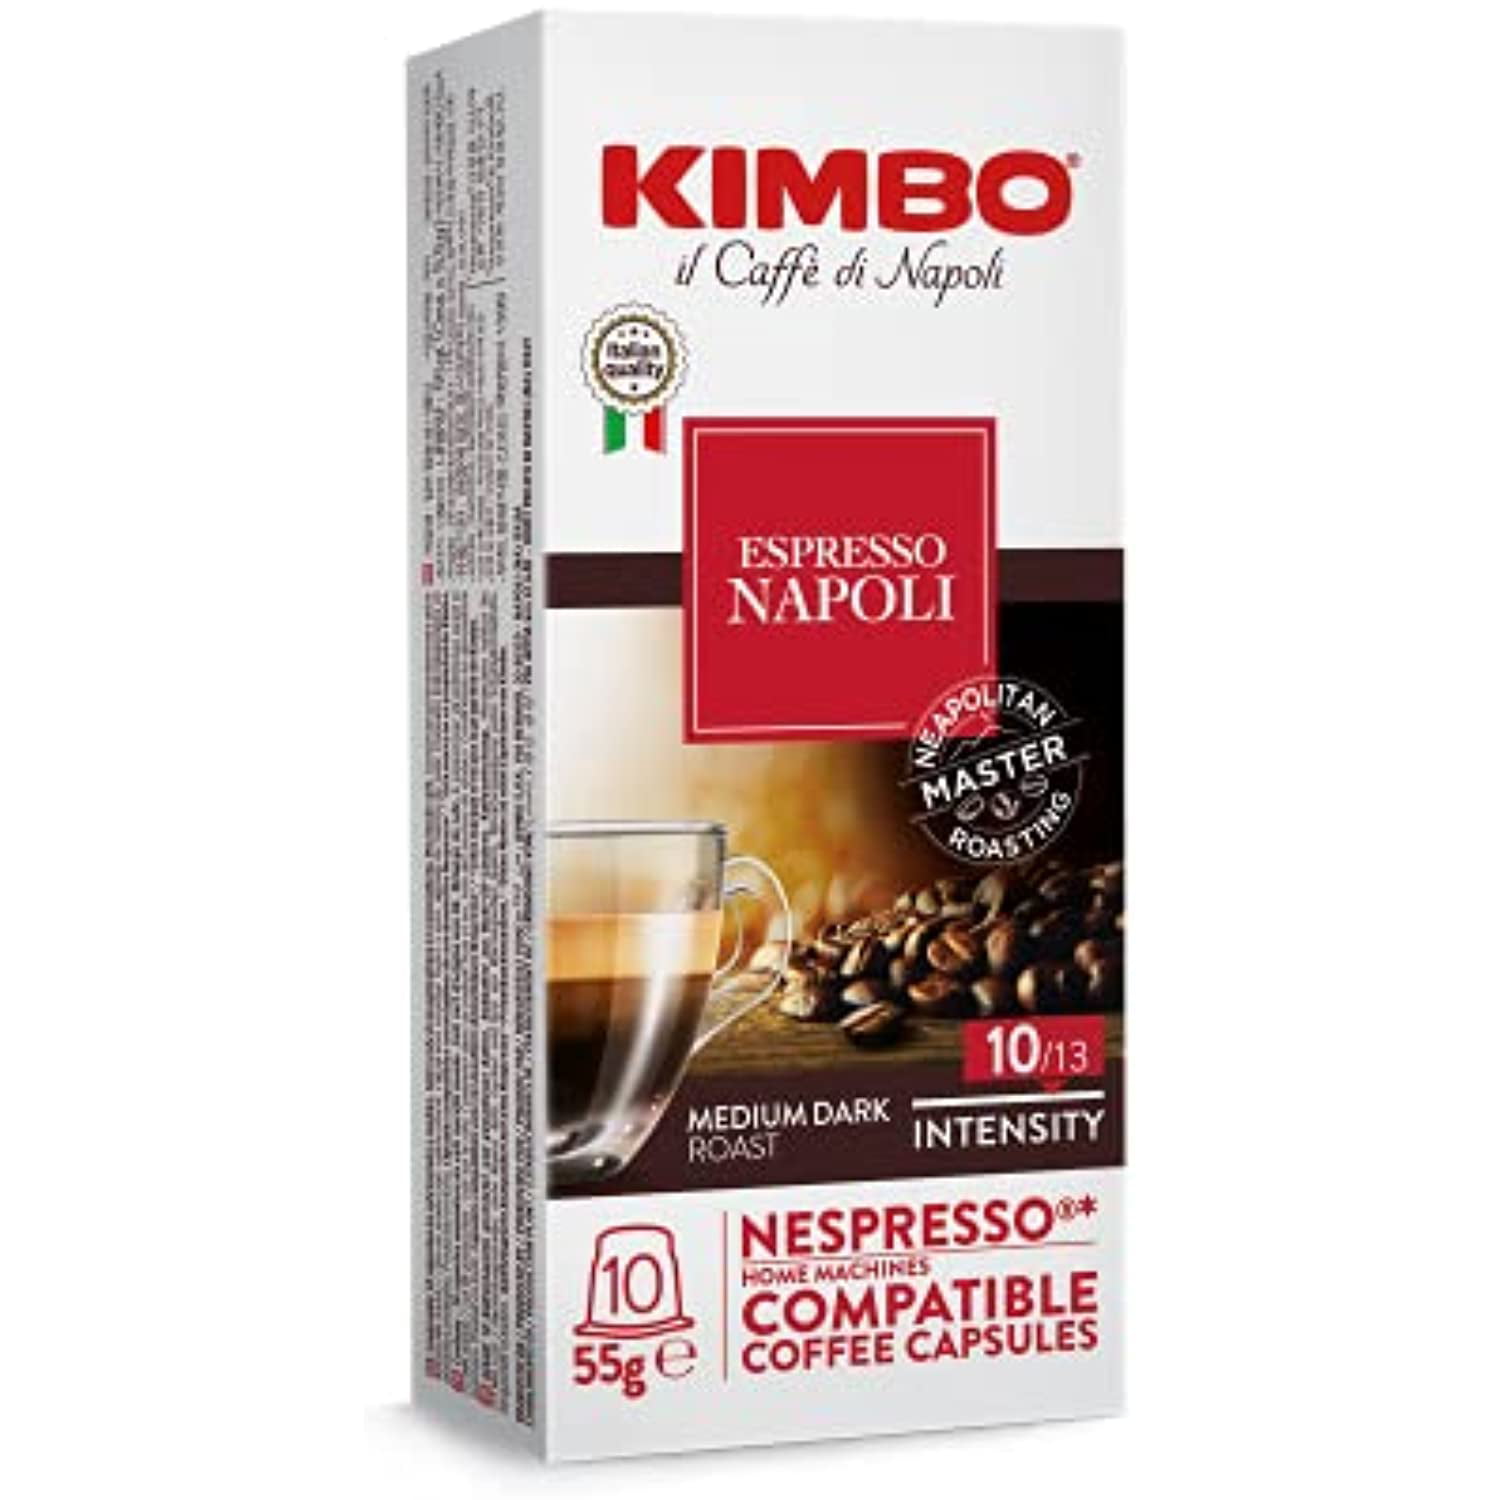 4 Boxes Of Kimbo Espresso Napoli Capsules -